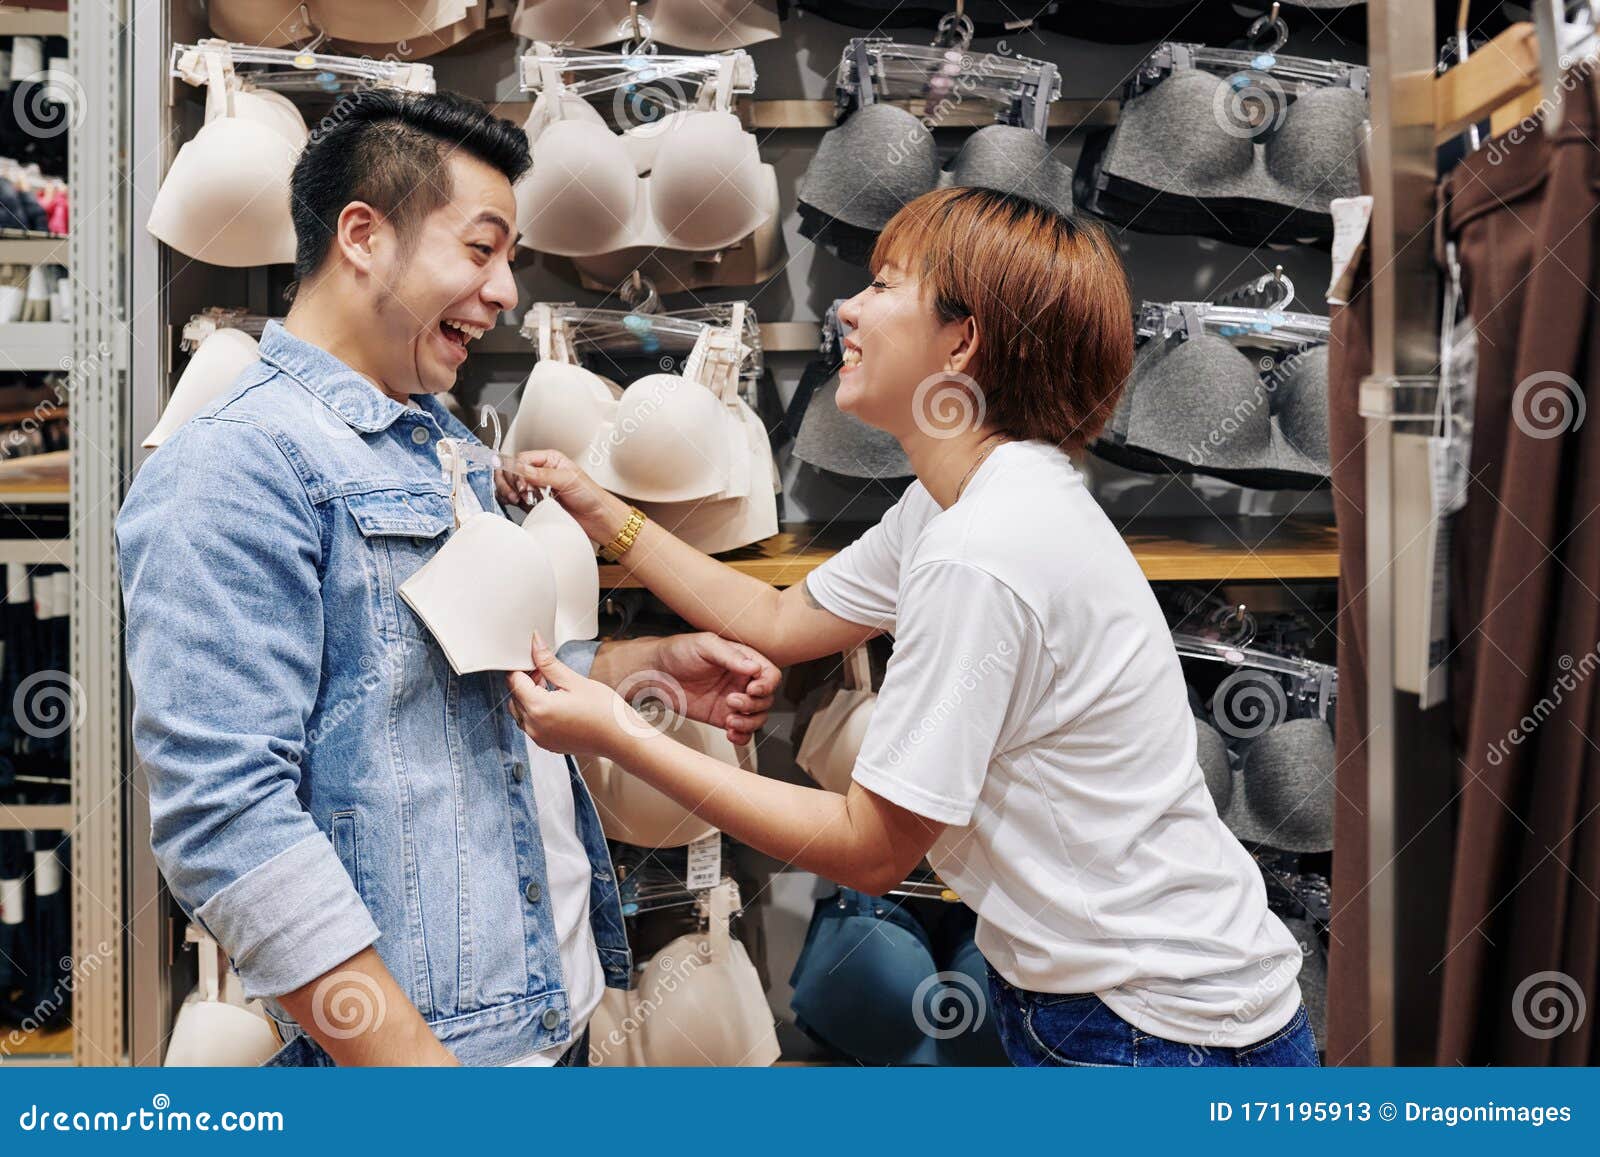 https://thumbs.dreamstime.com/z/funny-couple-underwear-store-young-asian-having-fun-modern-women-s-horizontal-side-view-shot-171195913.jpg